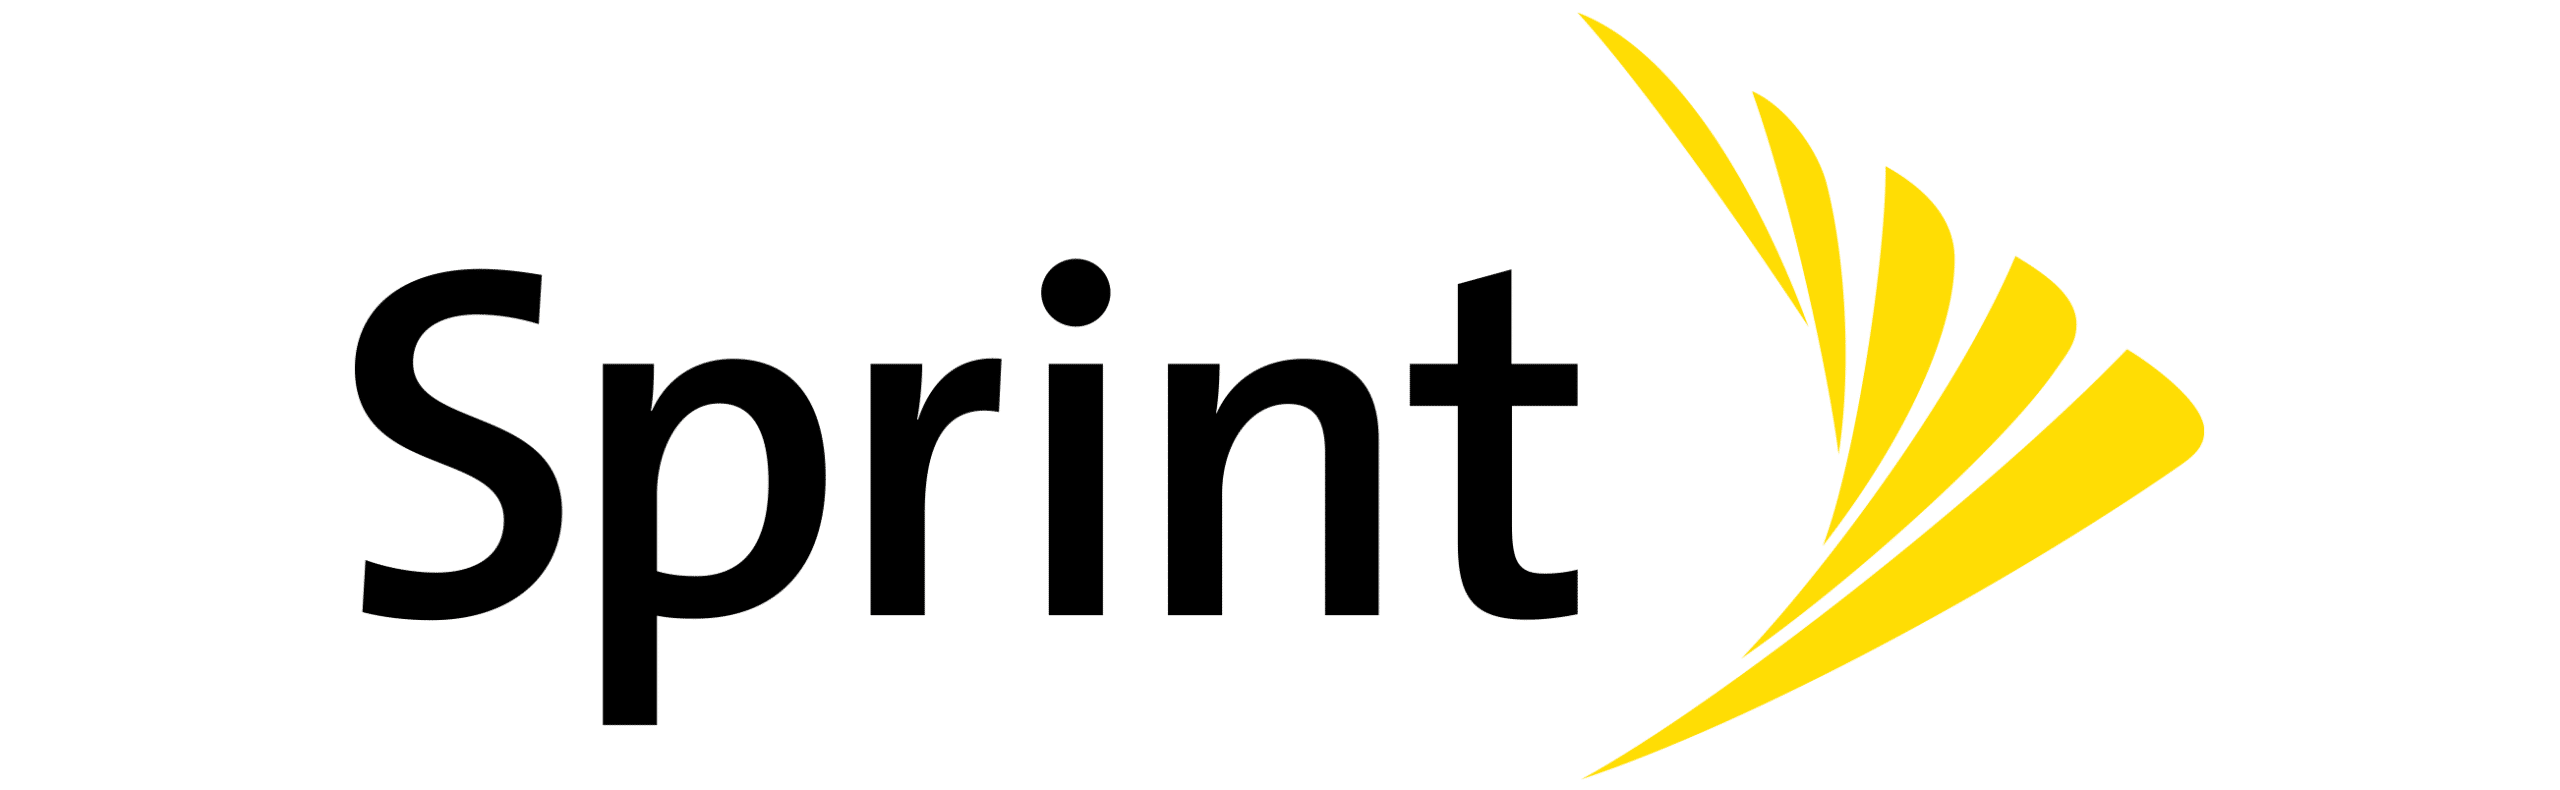 Sprint_Corporation_Logo